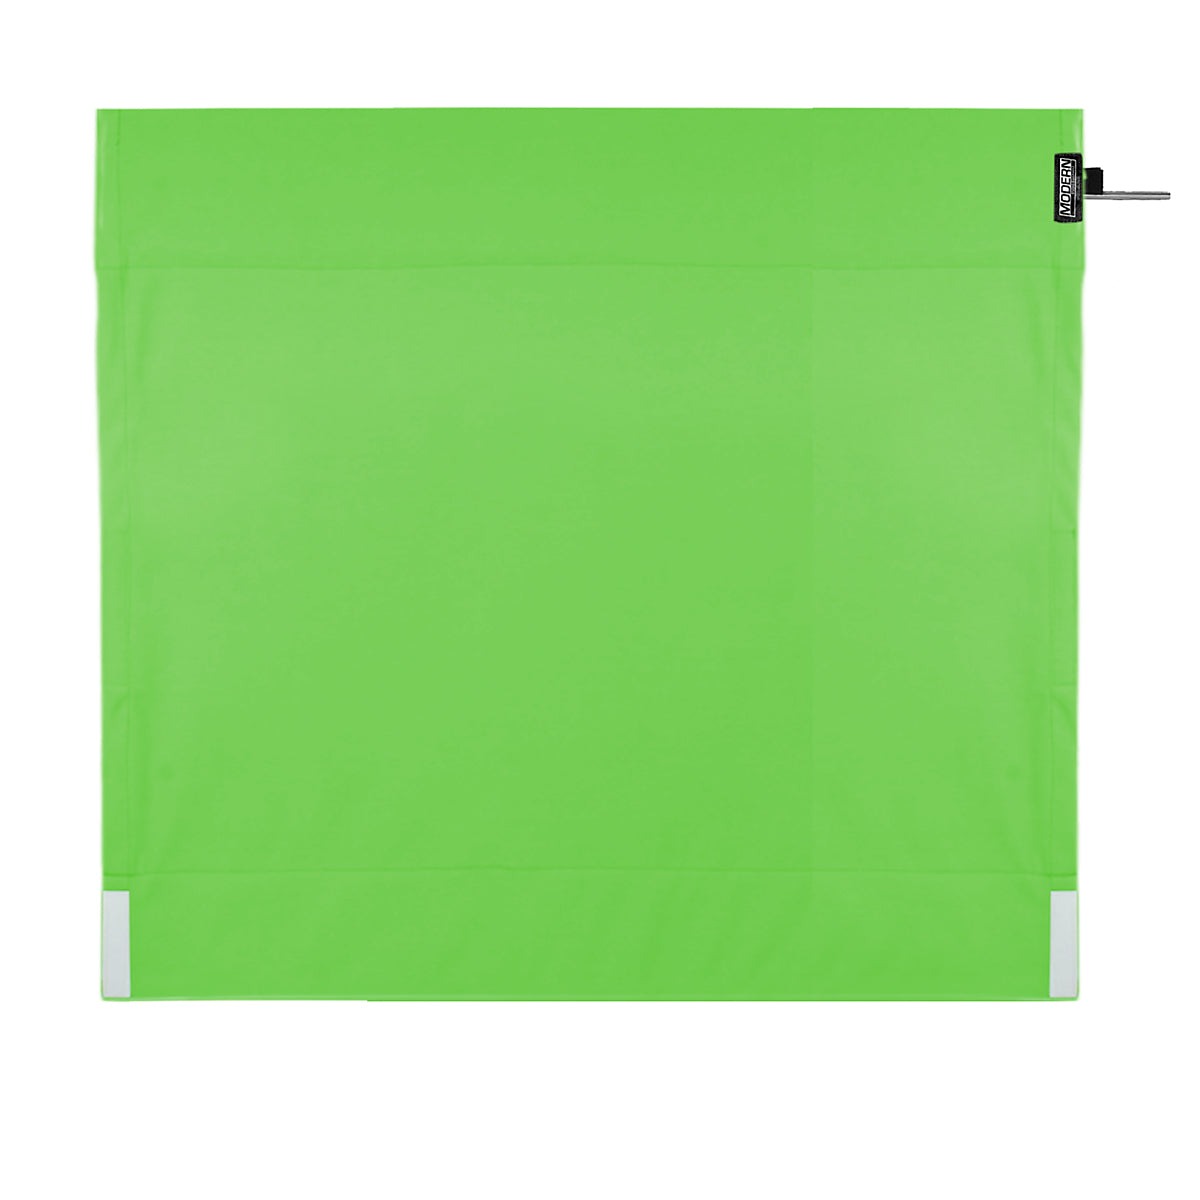 Digital Green Wag Flags